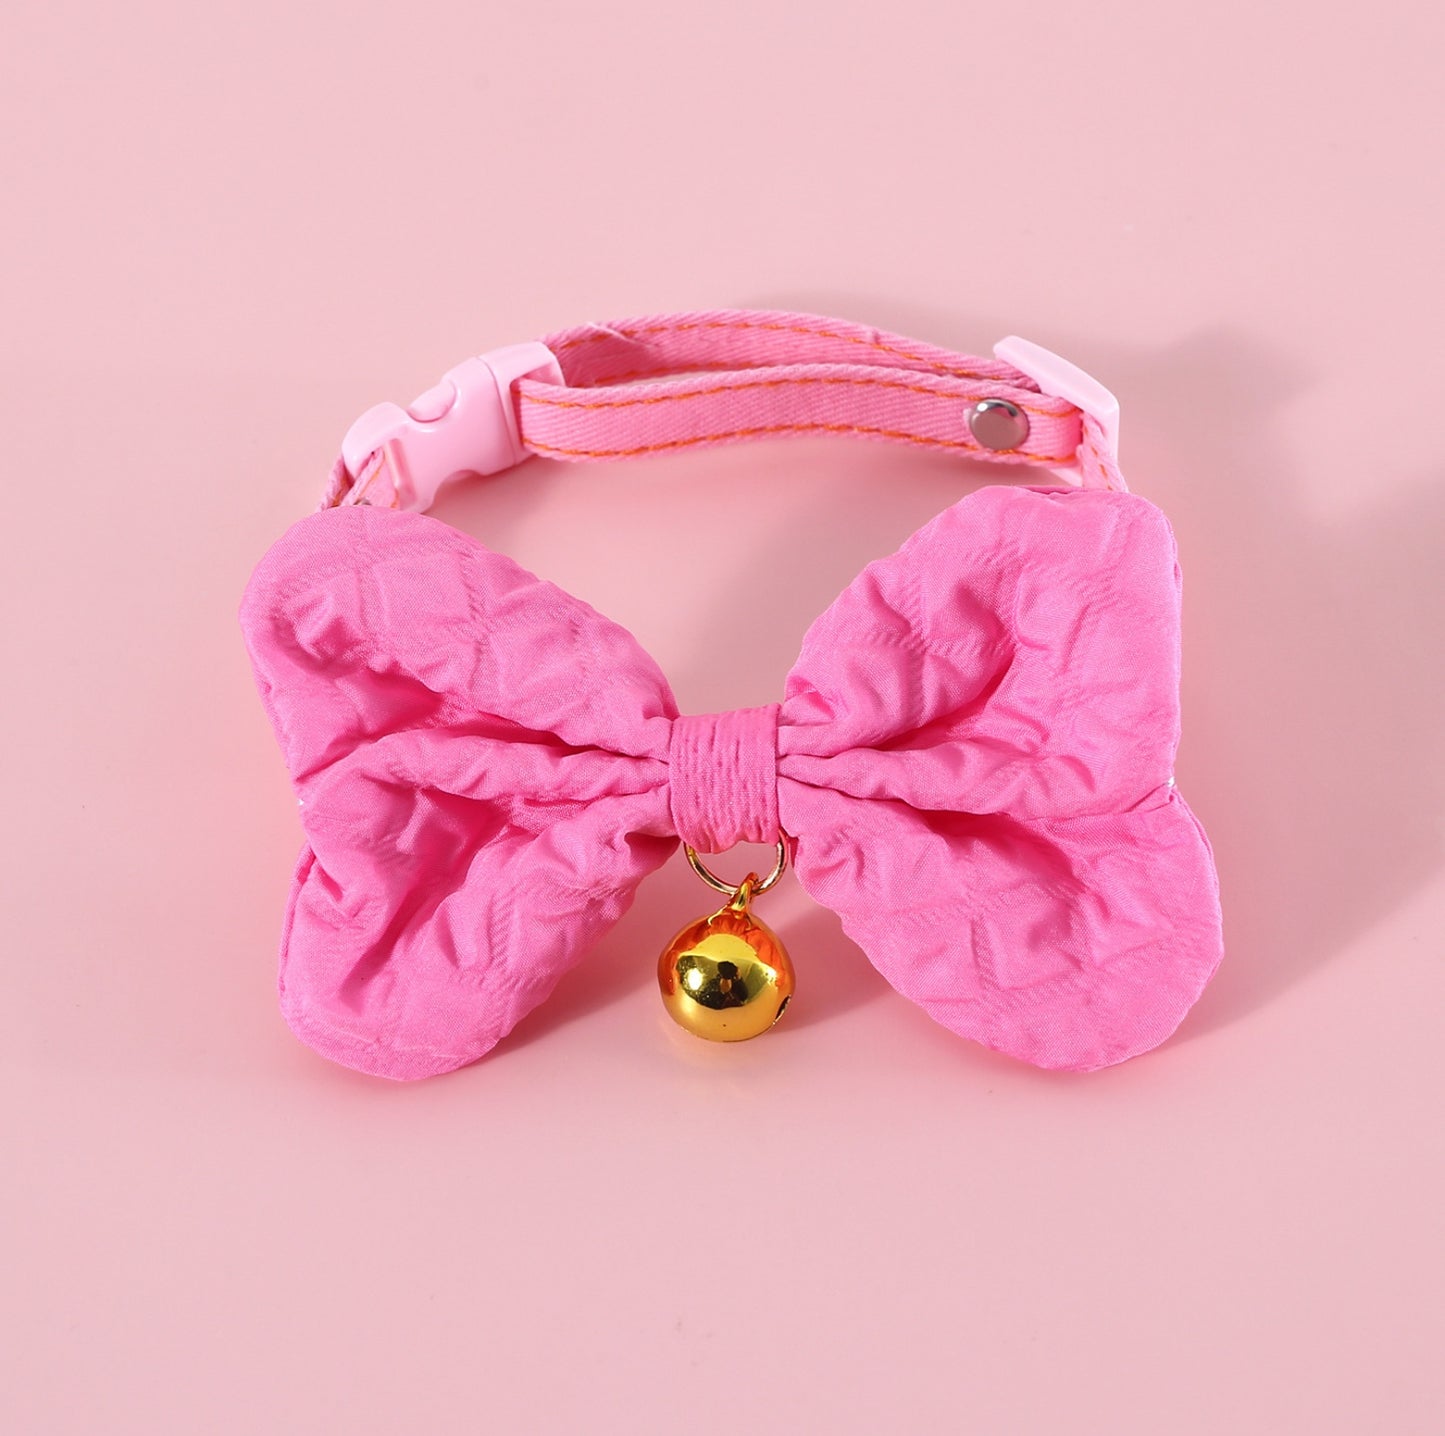 Candy-Colored Denim Bowtie Adjustable Pet Collar